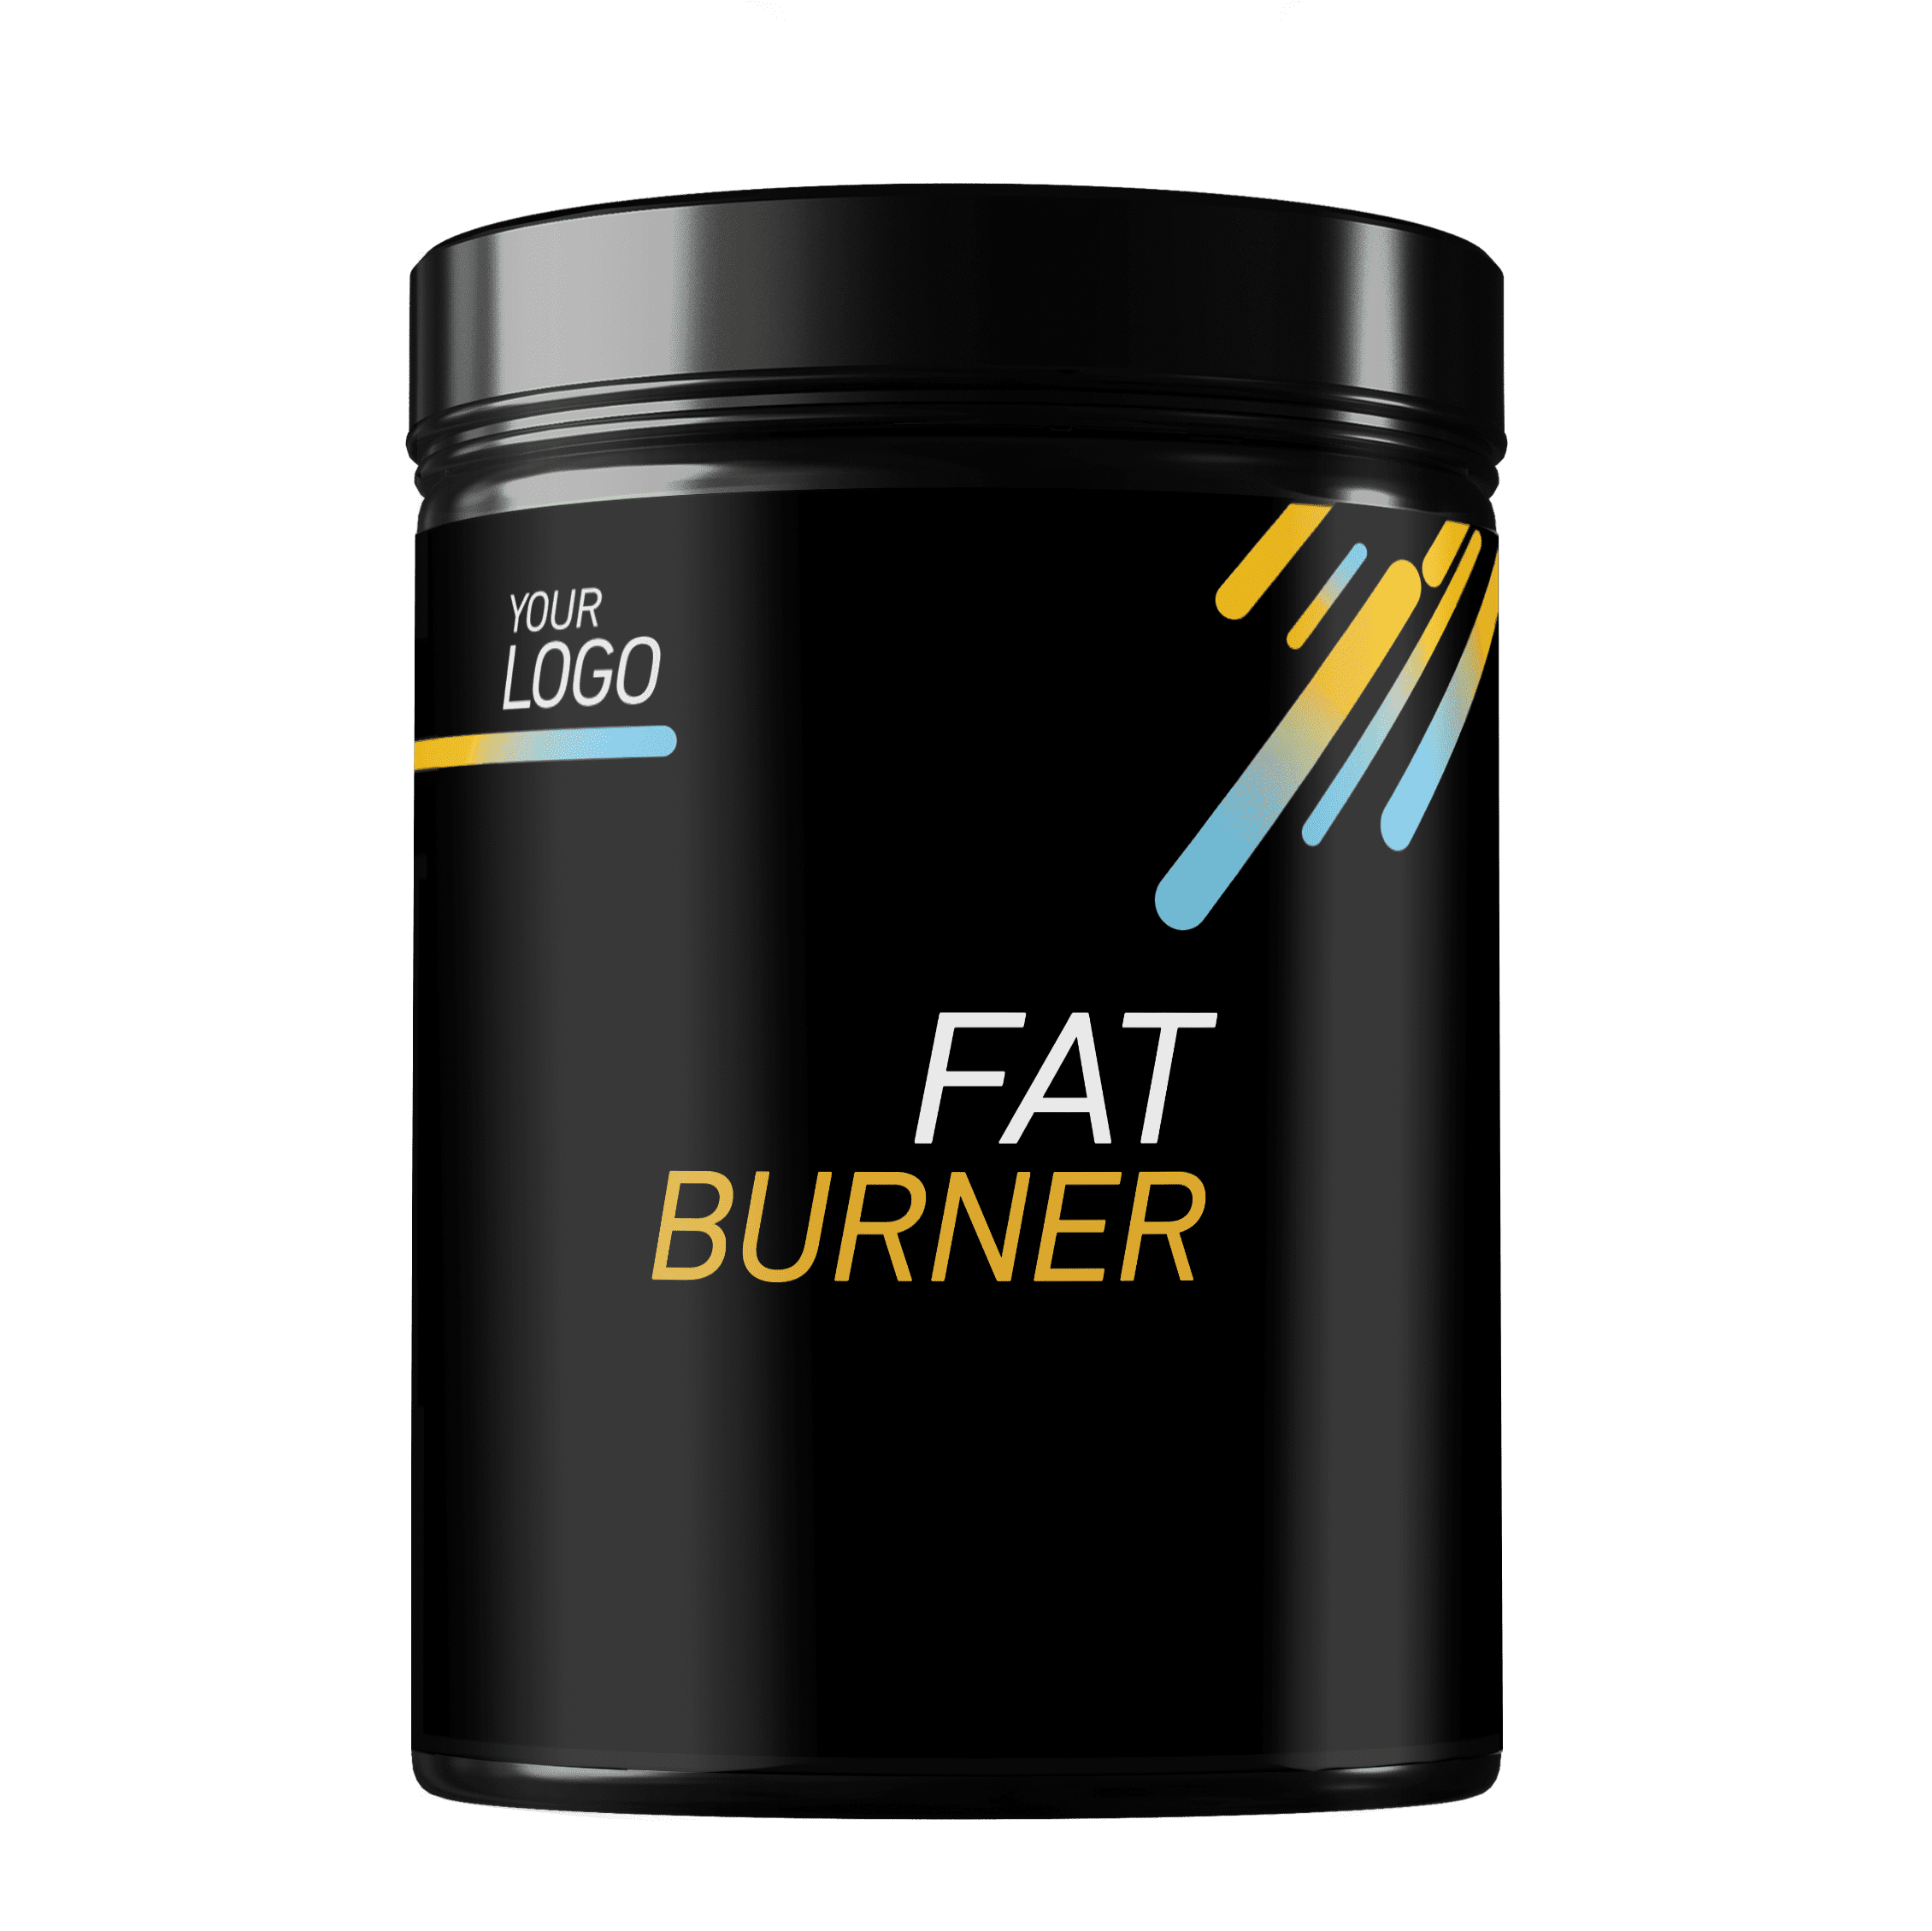 fat-burner-jar